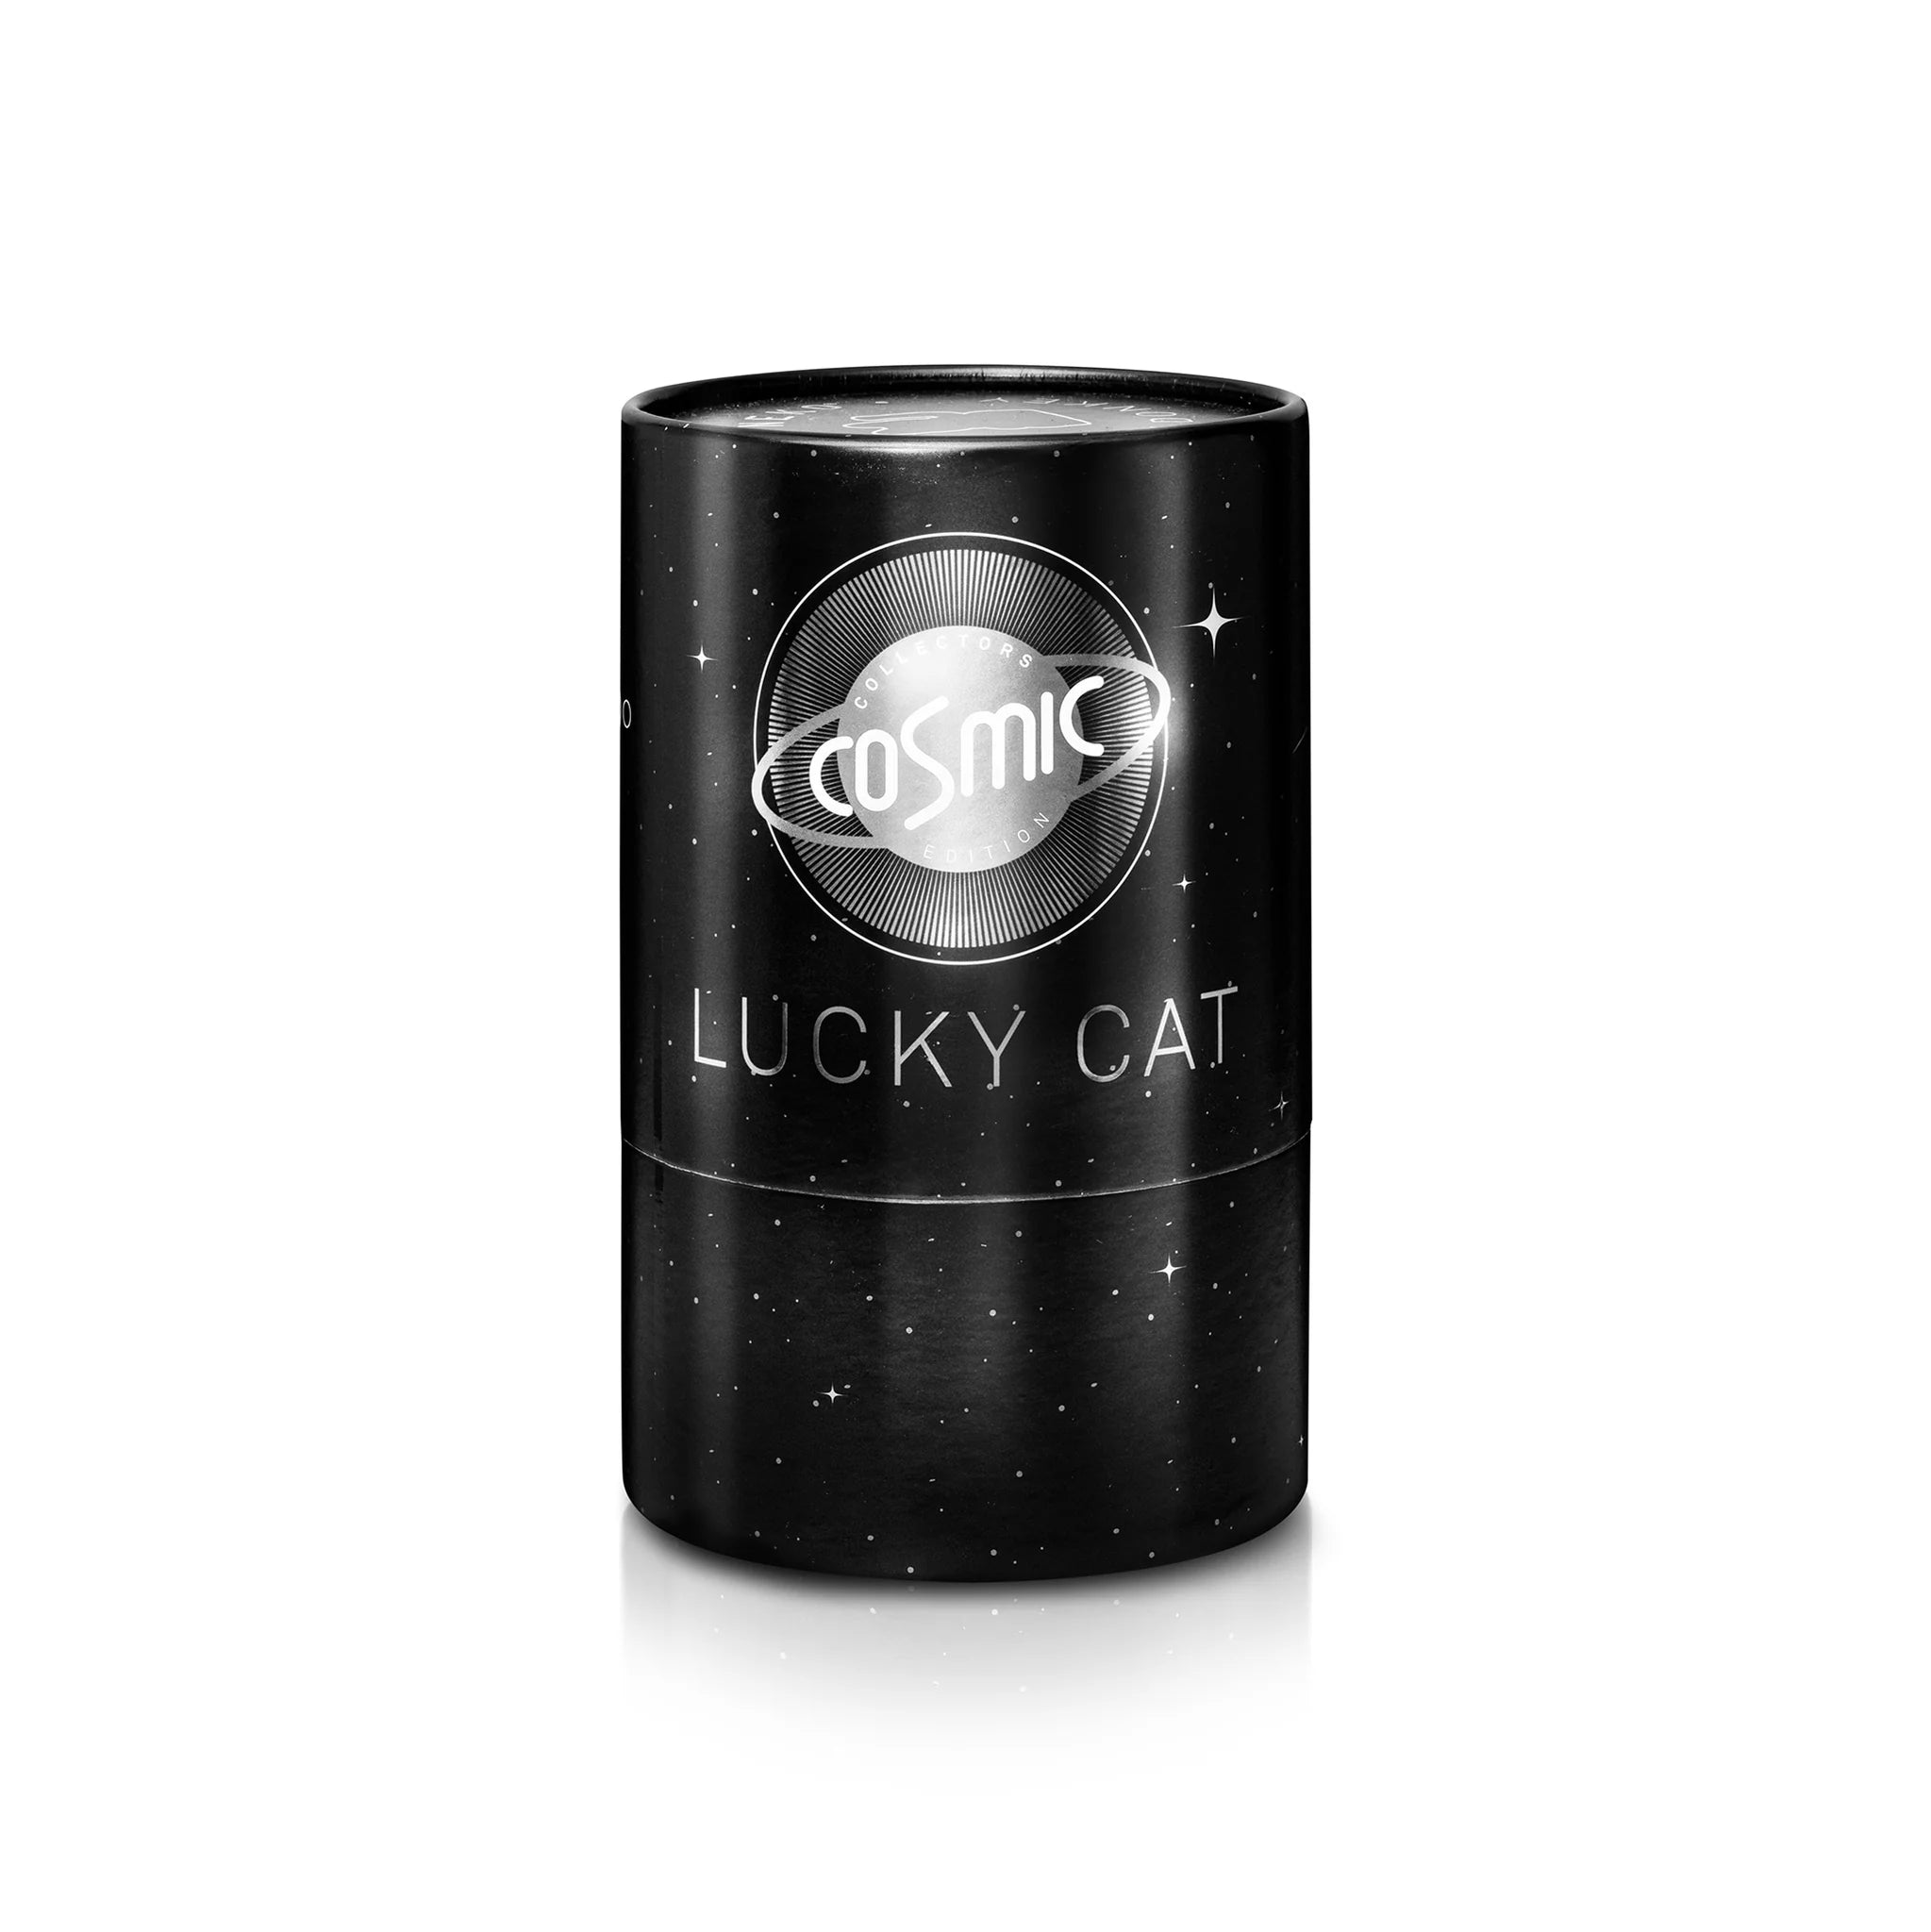 Lucky cat cosmic edition Mercury - shiny silver - Urban Nest